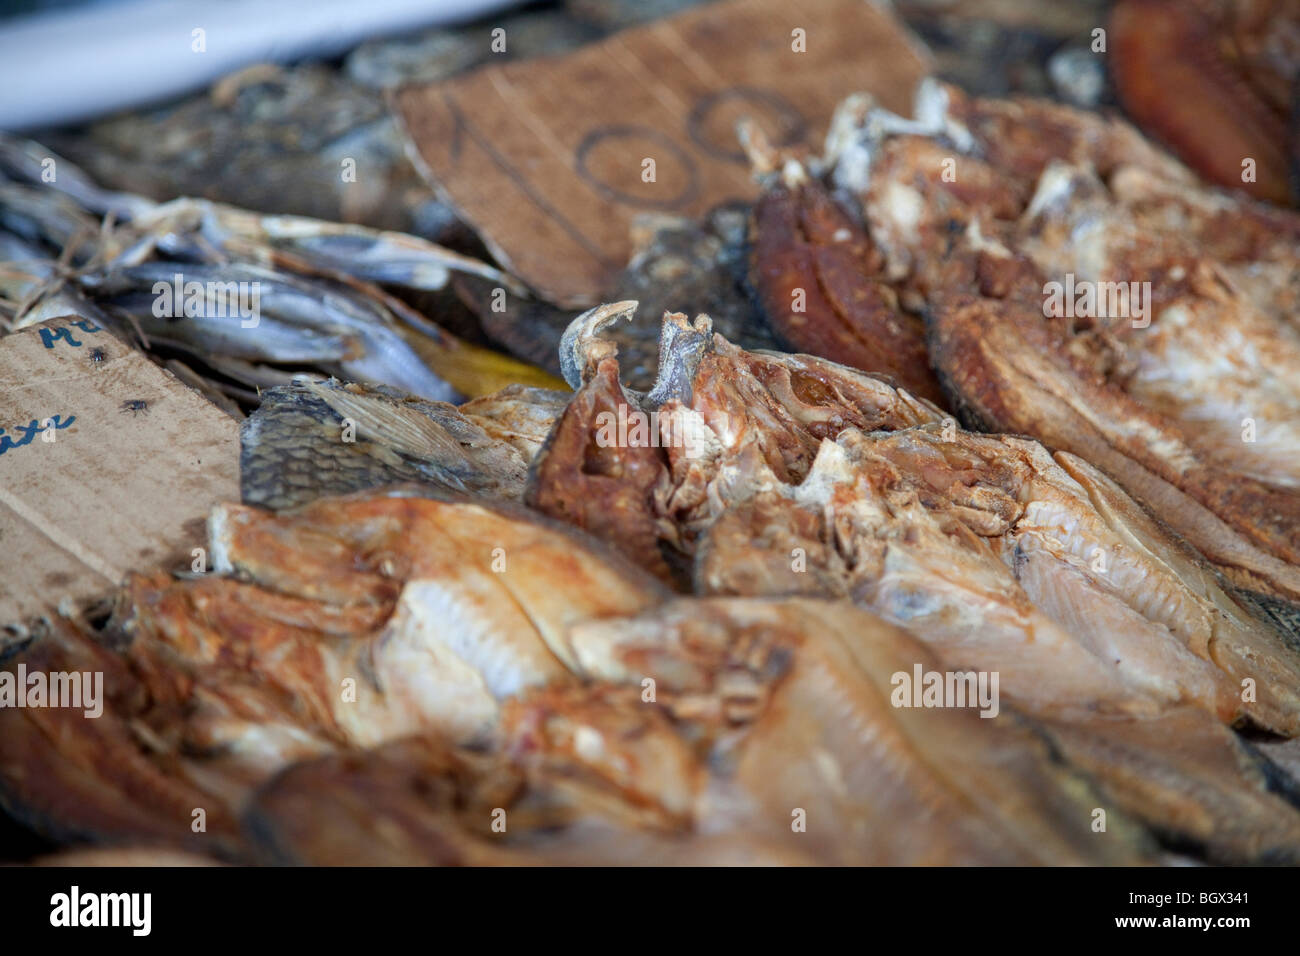 The Mercado Central in the Baixa district, dried fish, Maputo, Mozambique Stock Photo